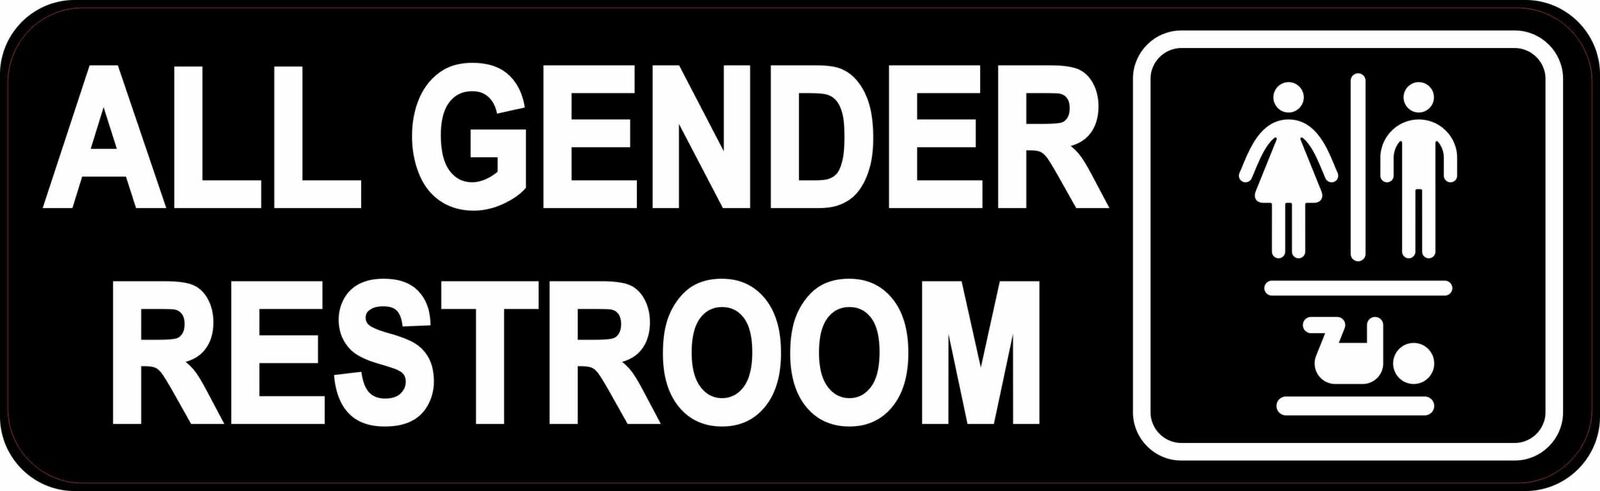 10in x 3in All Gender Restroom Magnet Magnetic Business Sign